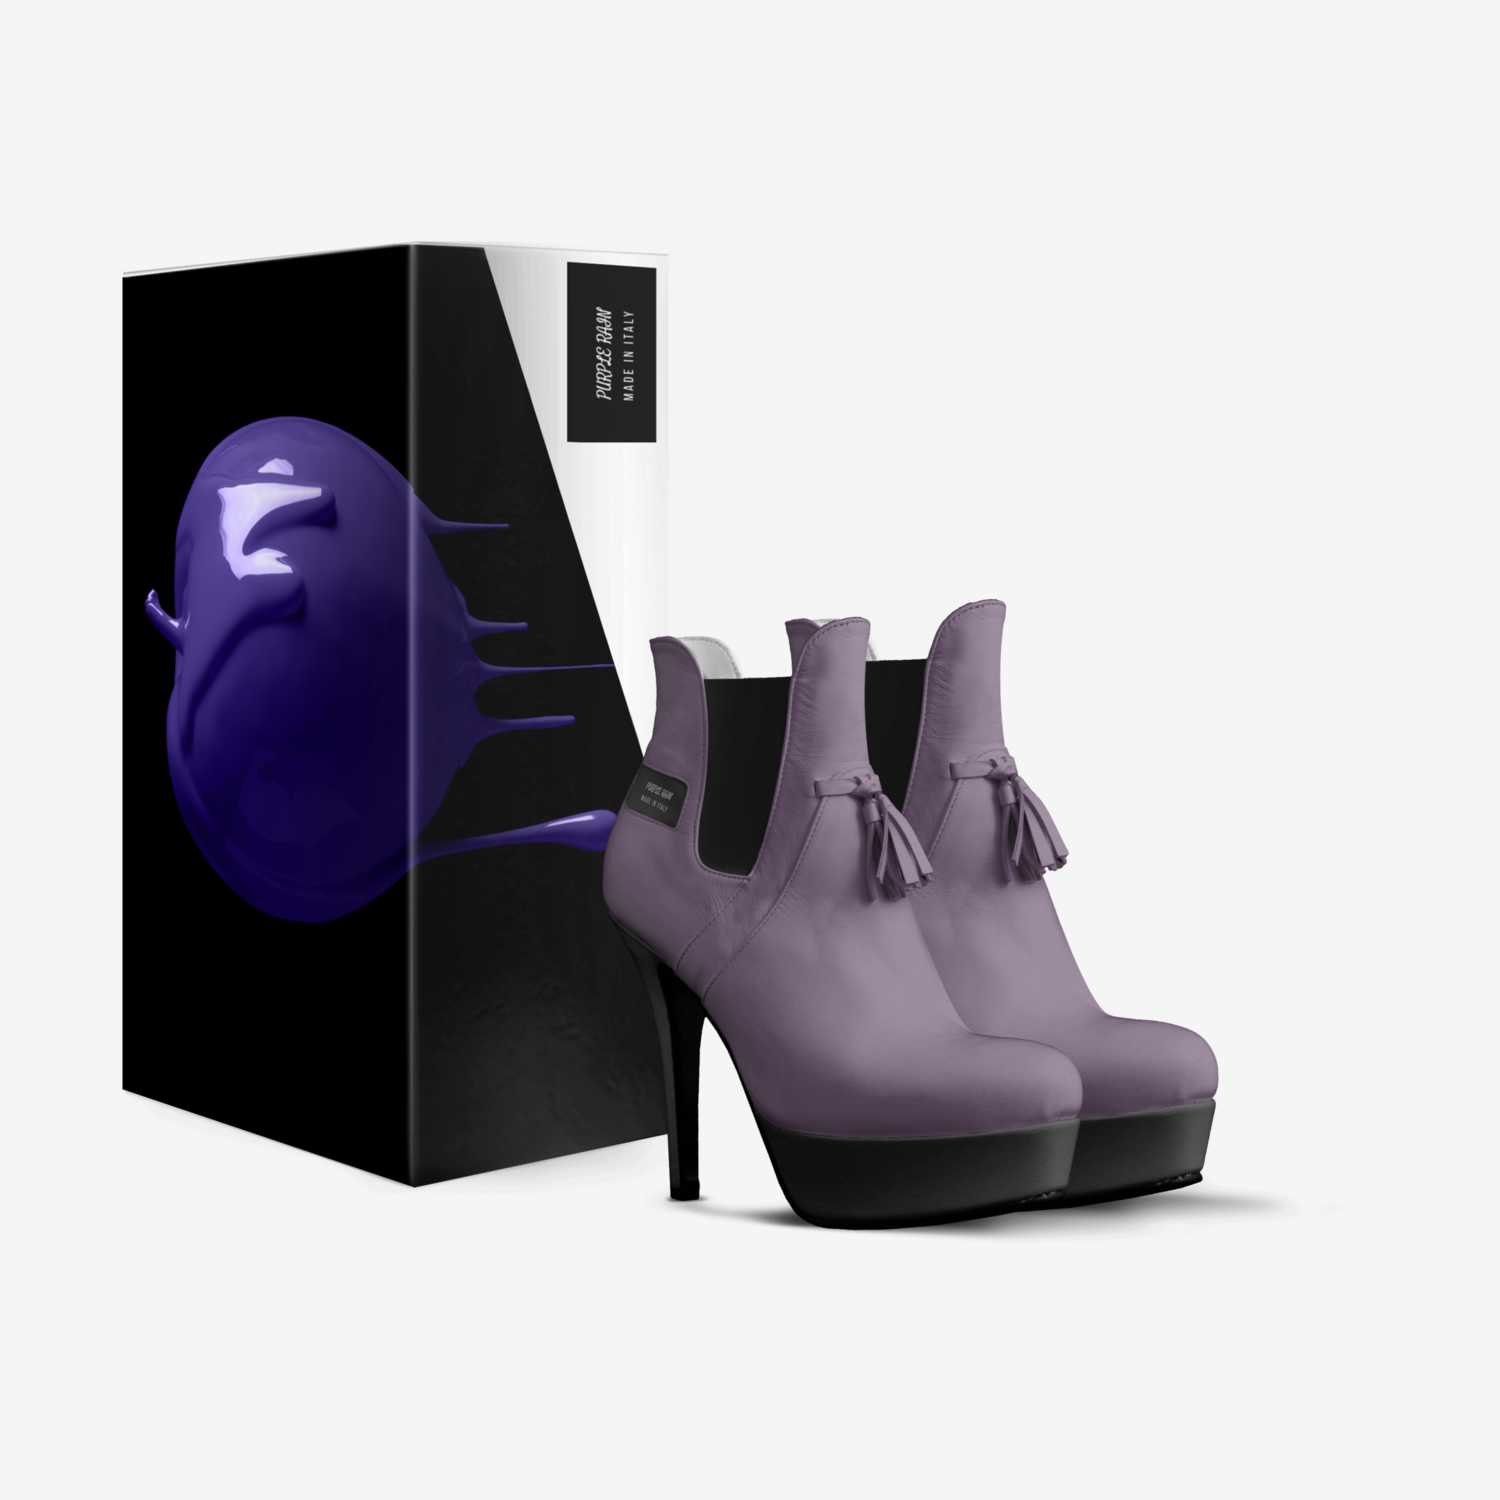 PURPLE RAIN custom made in Italy shoes by Diana Villavicencio | Box view